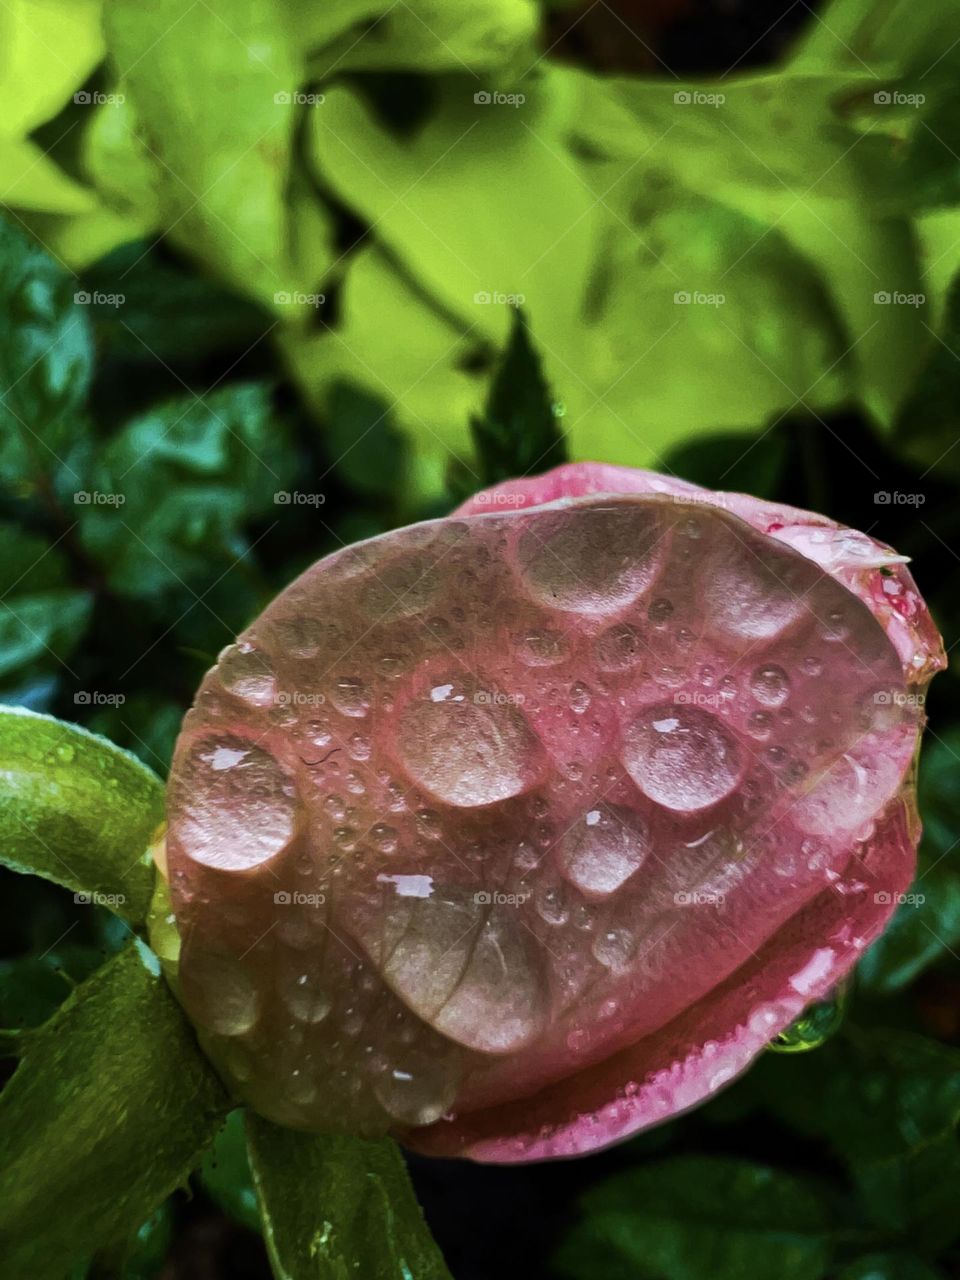 Raindrops on the flower